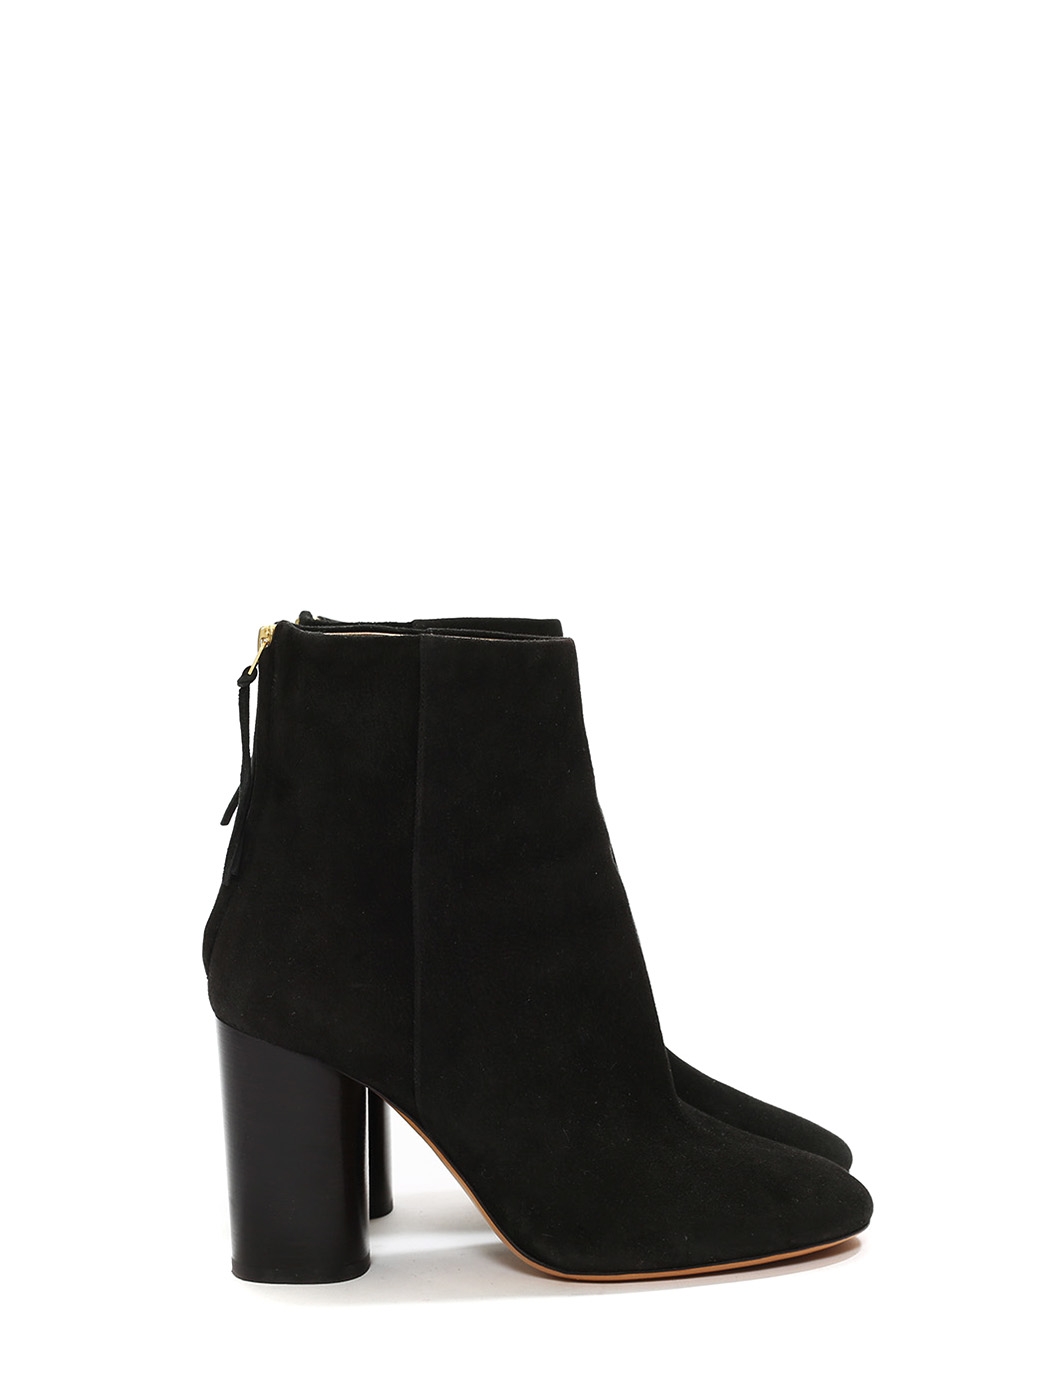 Boutique ISABEL MARANT GARETT black block-heel ankle boots Retail price Size 36